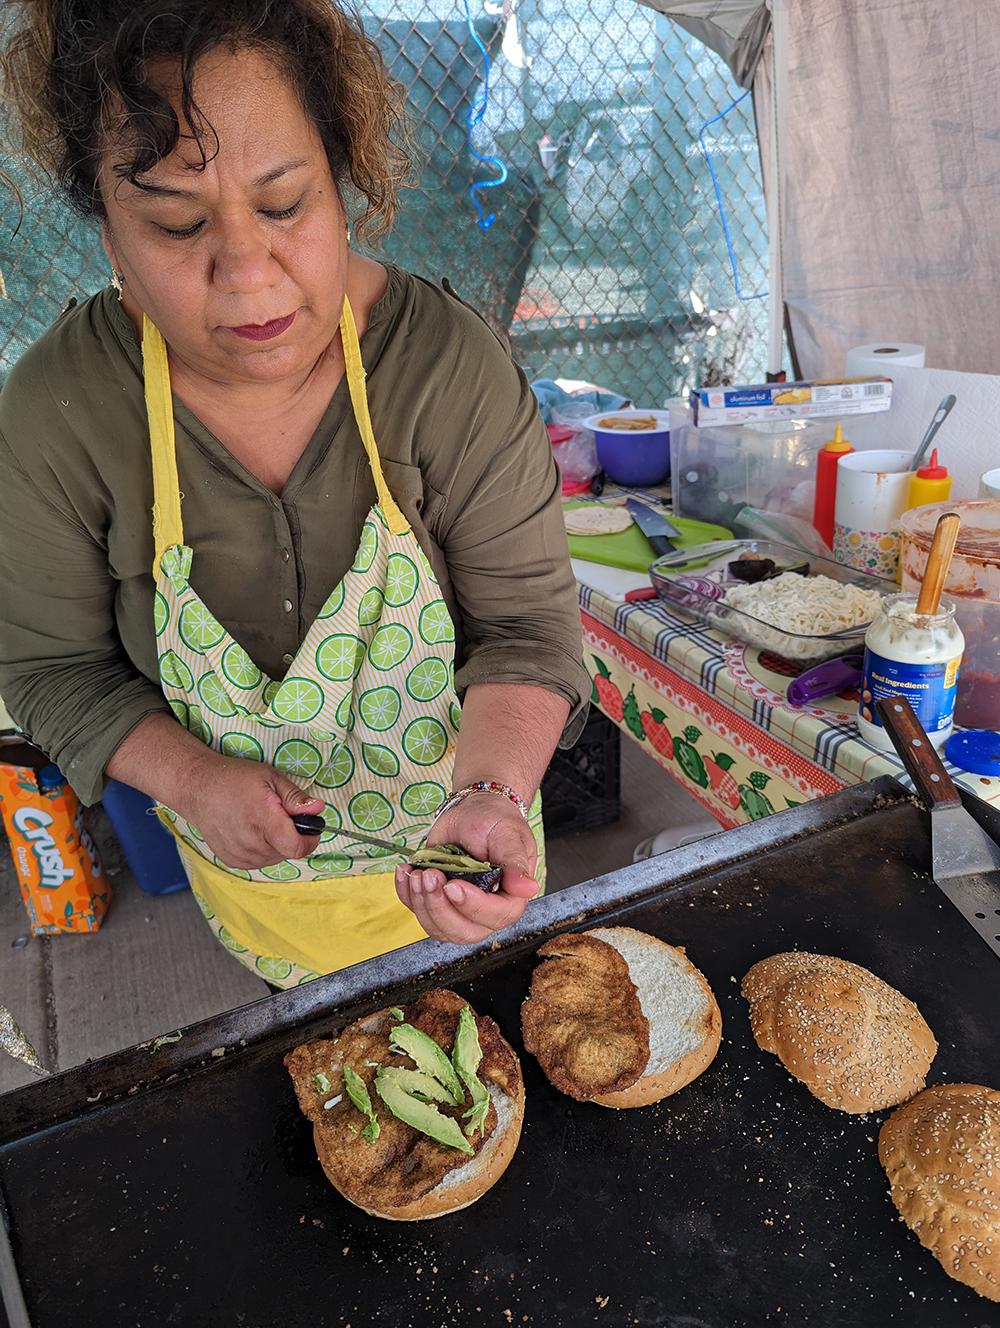 A woman adding sliced avocados to a cemita sandwich